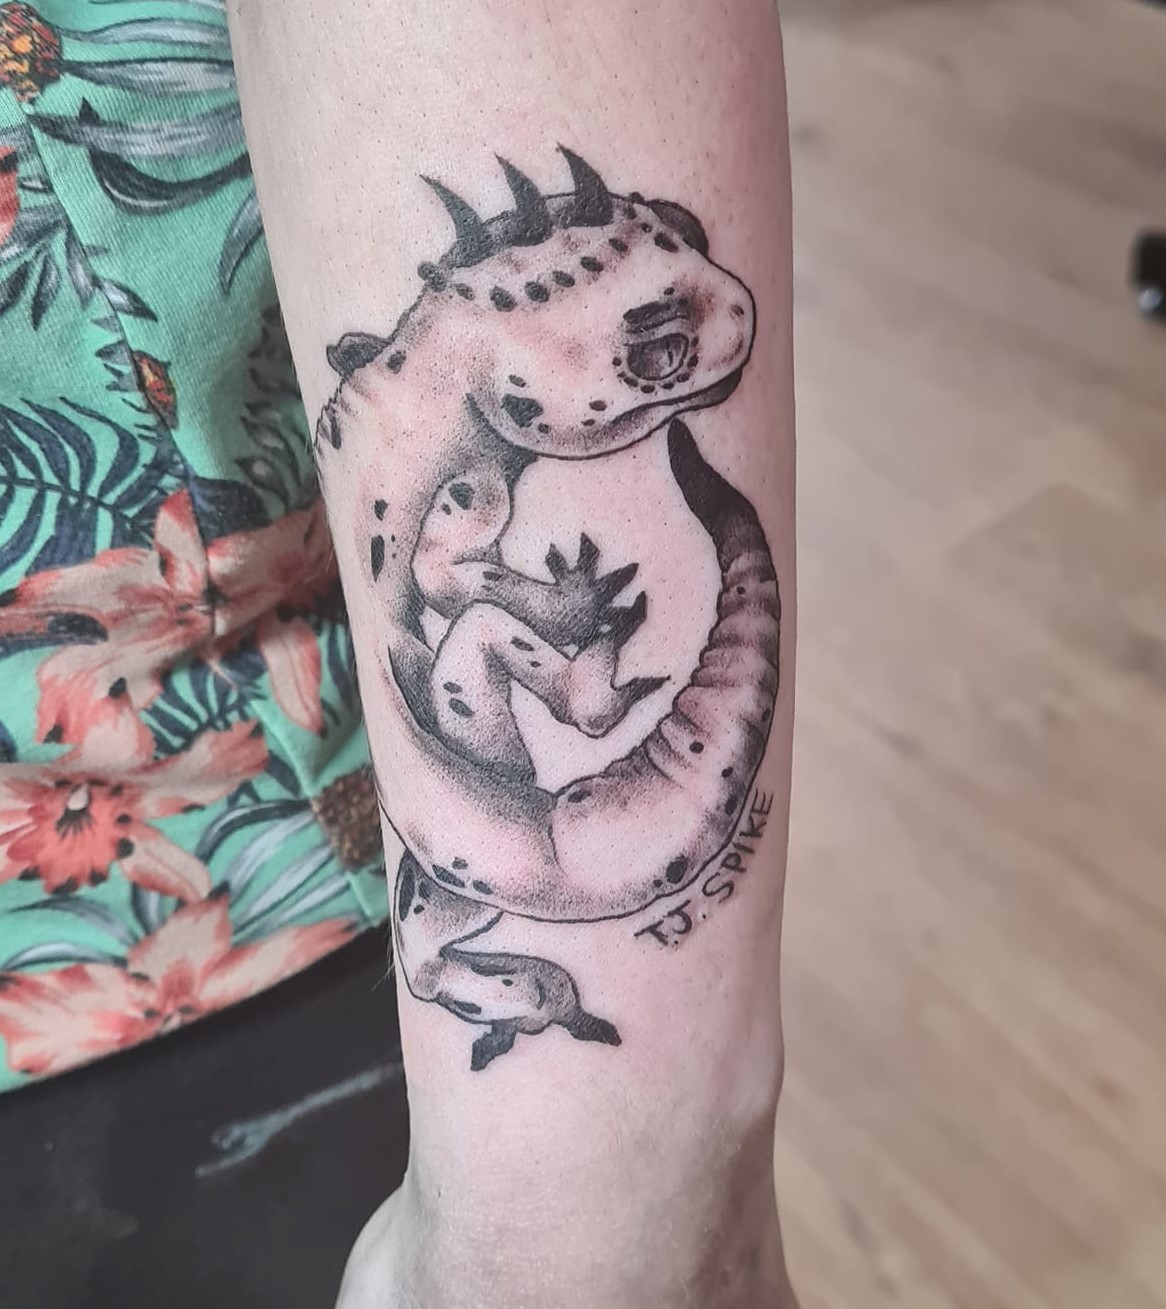 My tattoos help me feel more comfortable in my own skin  Brian Switek   The Guardian